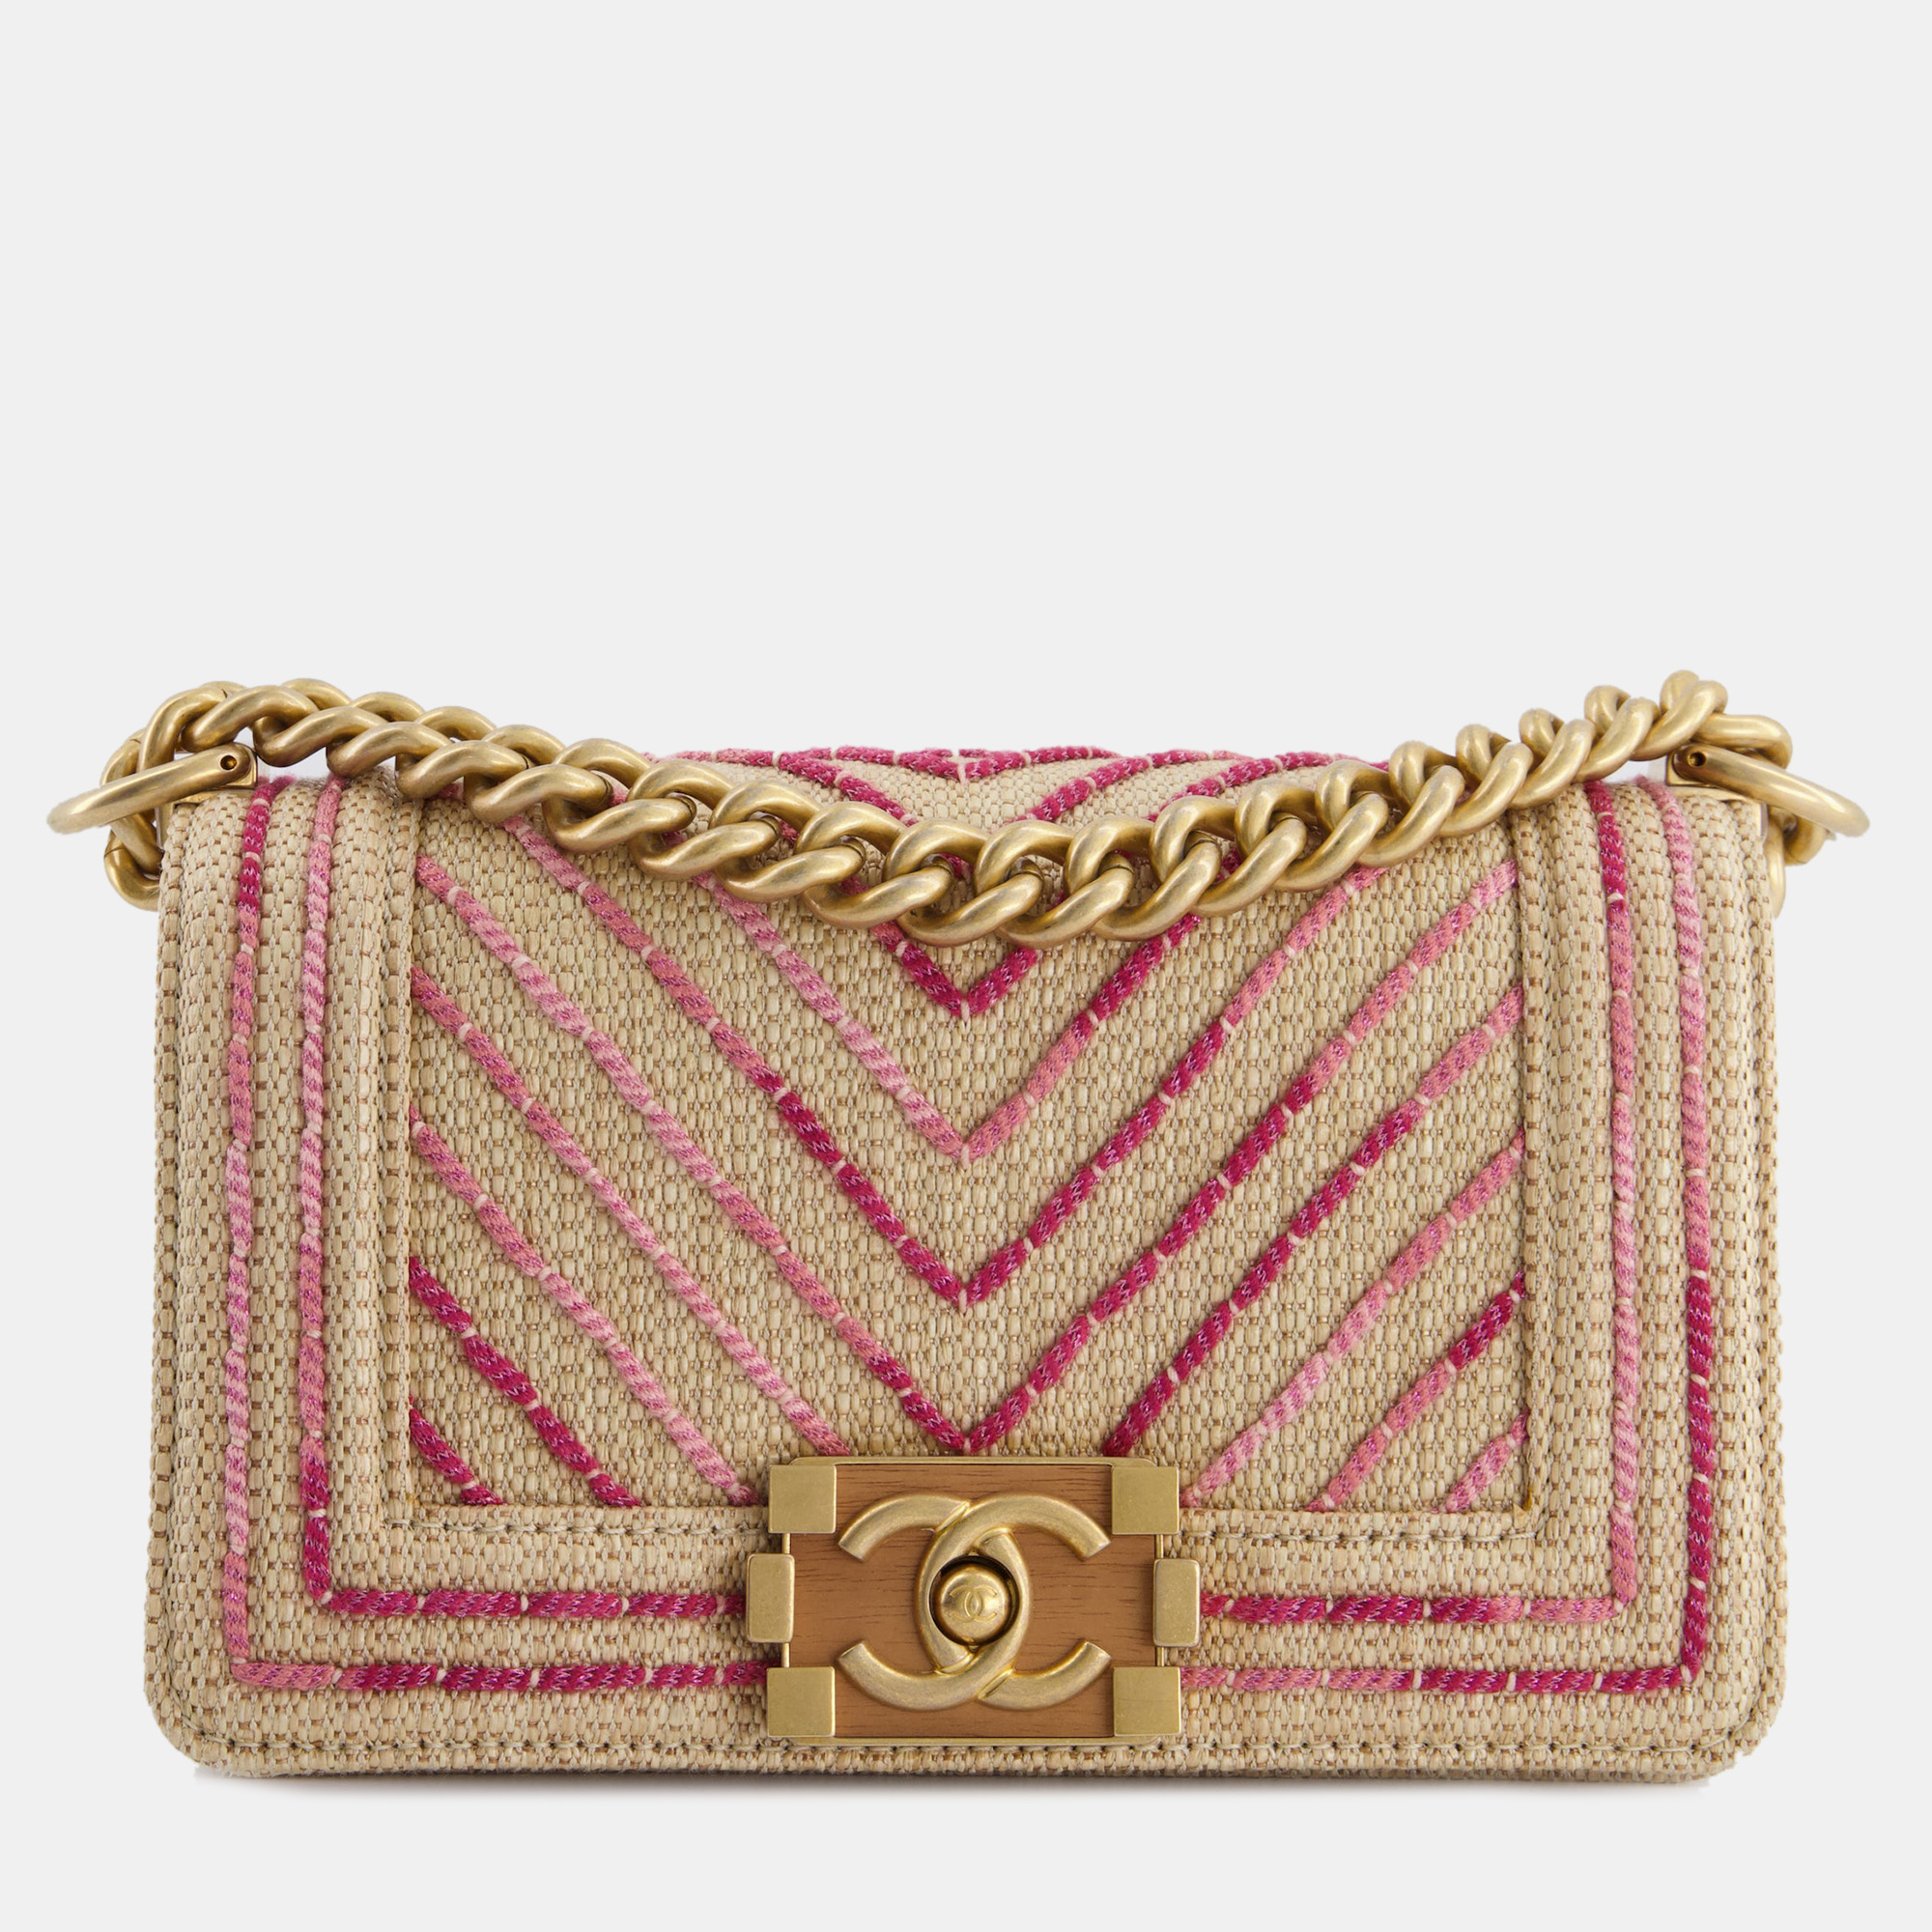 Chanel small raffia boy bag with metallic pink chevron stitch and brushed gold hardware